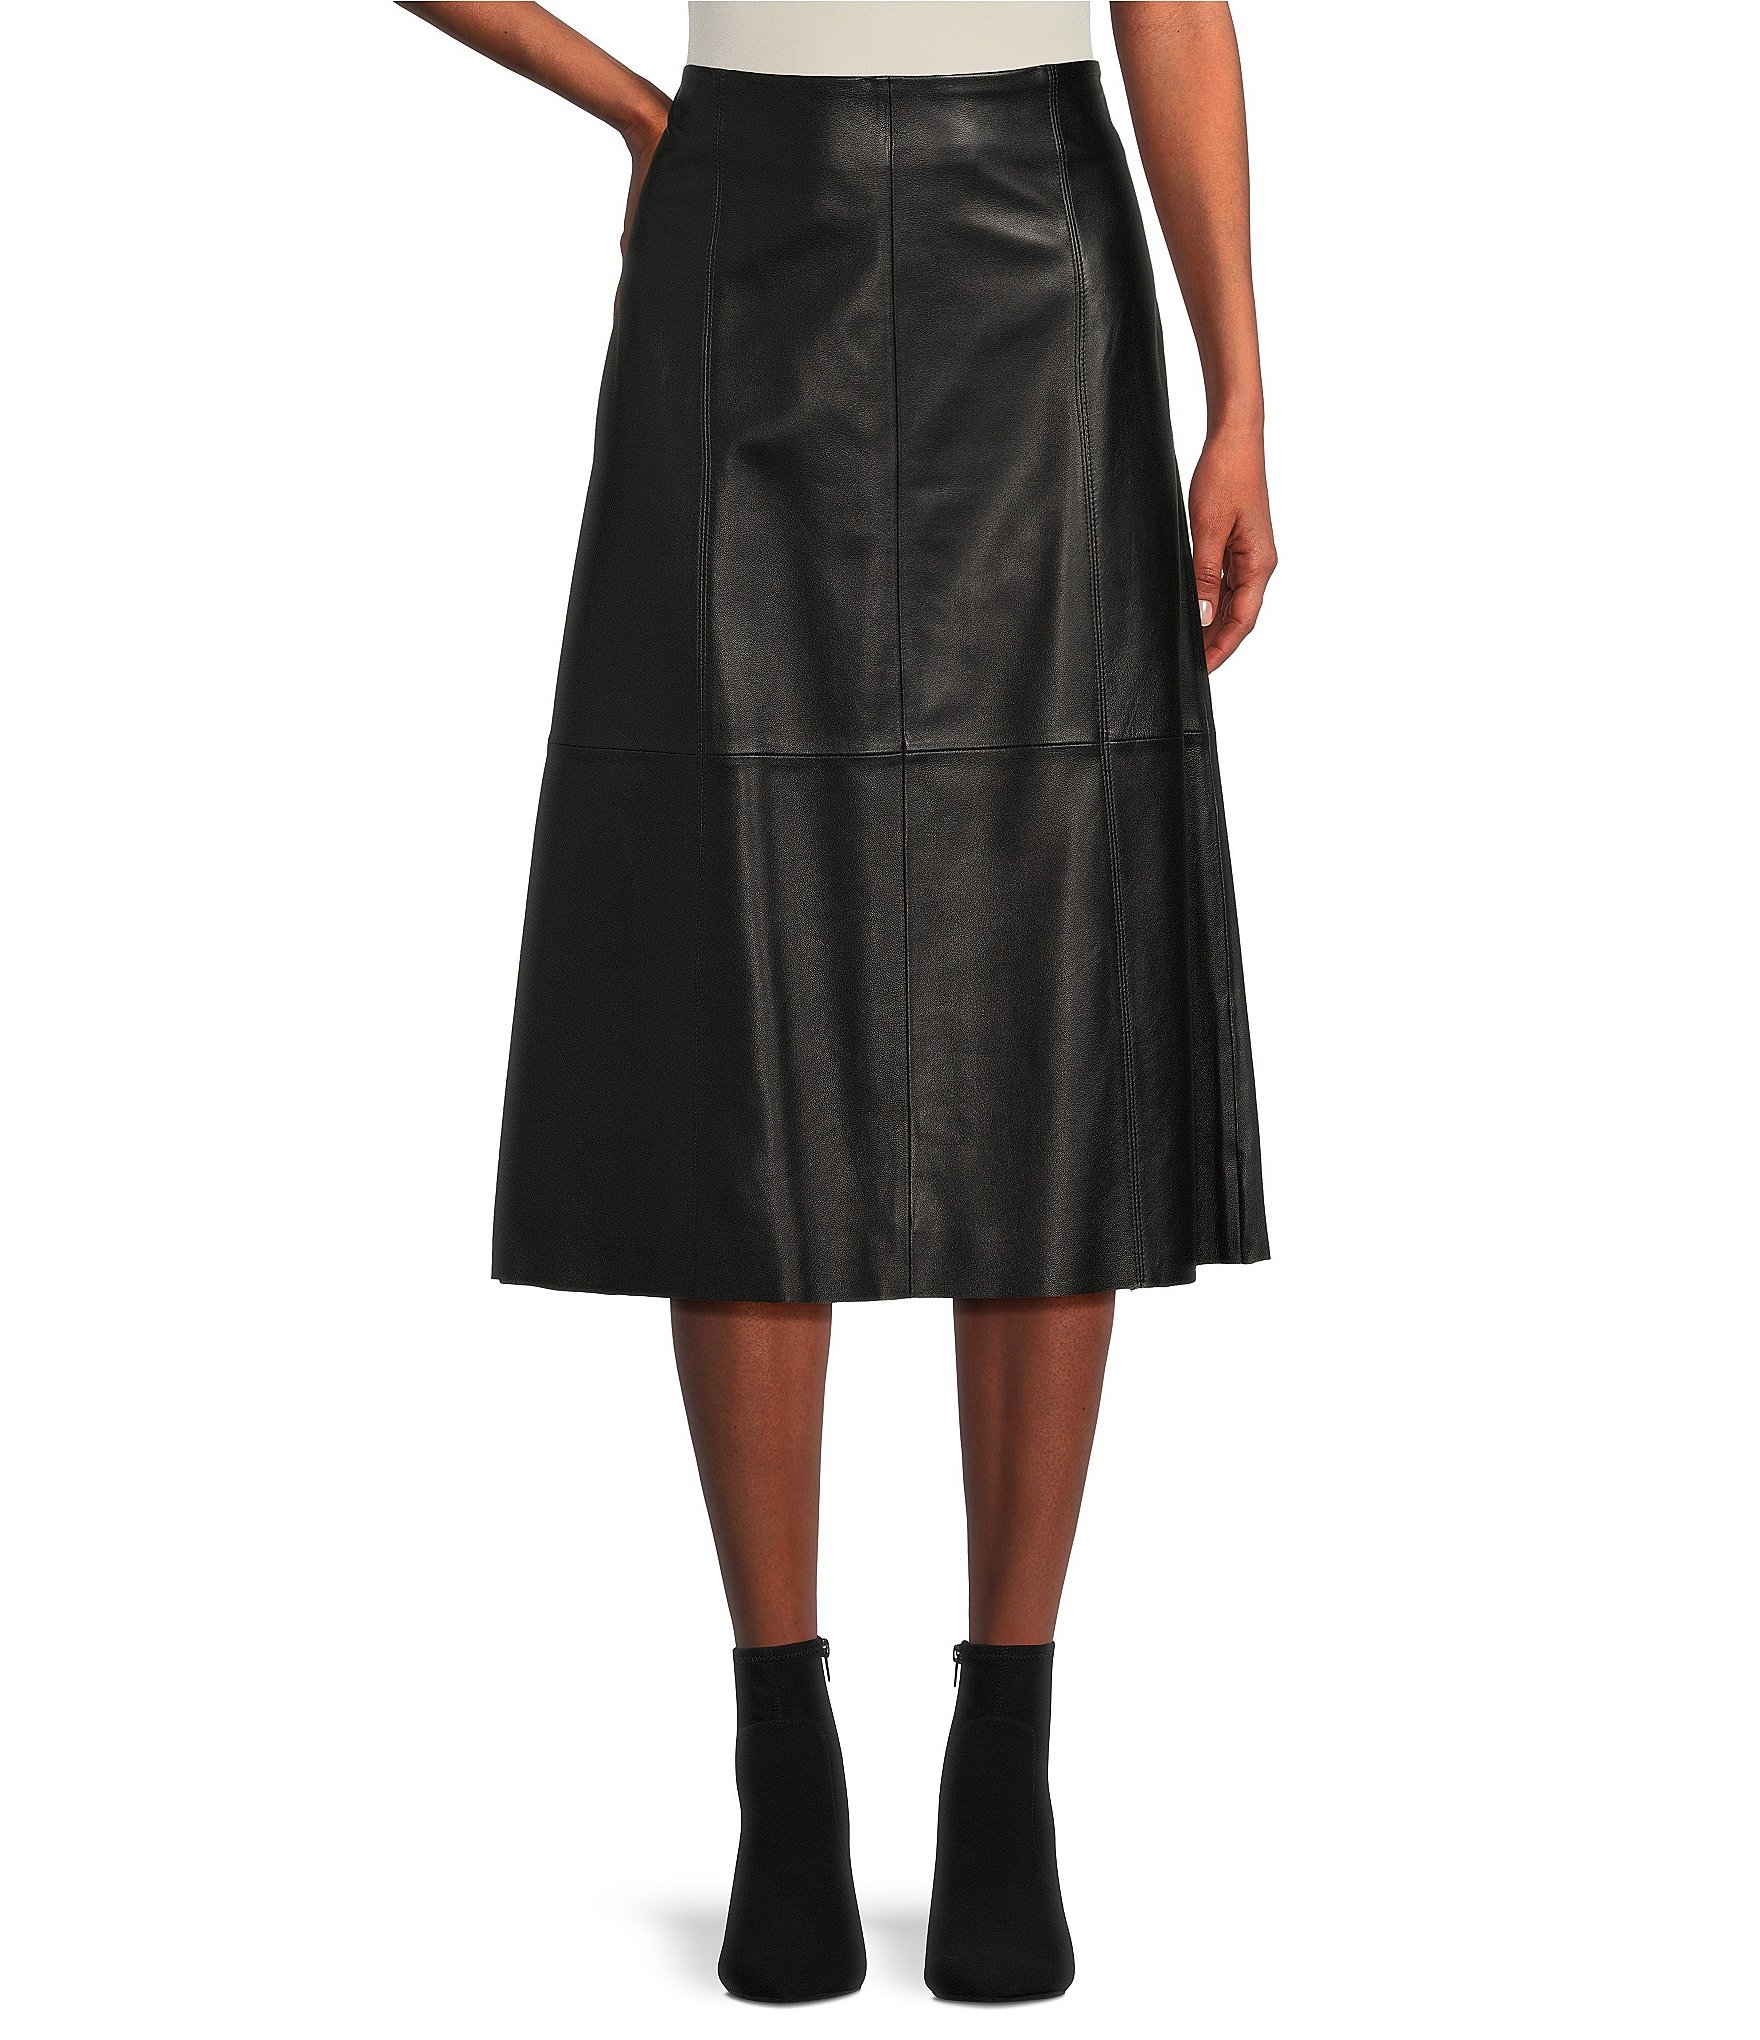 Leather High Waist Leather Skirt  KC Leather Signature Range - Regina - KC  Leather Co.